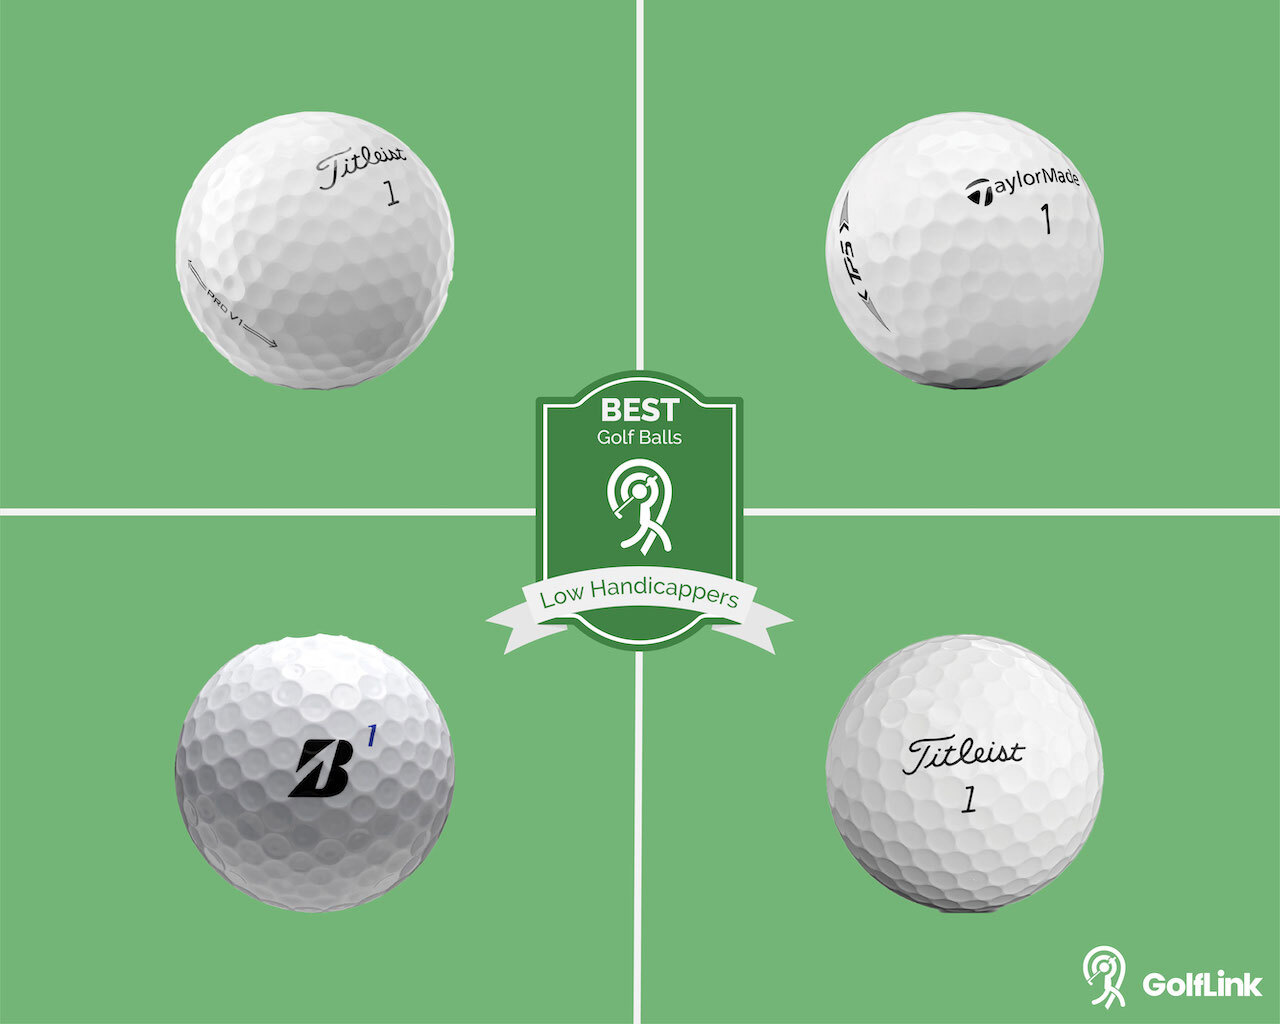 Golf balls for low handicaps